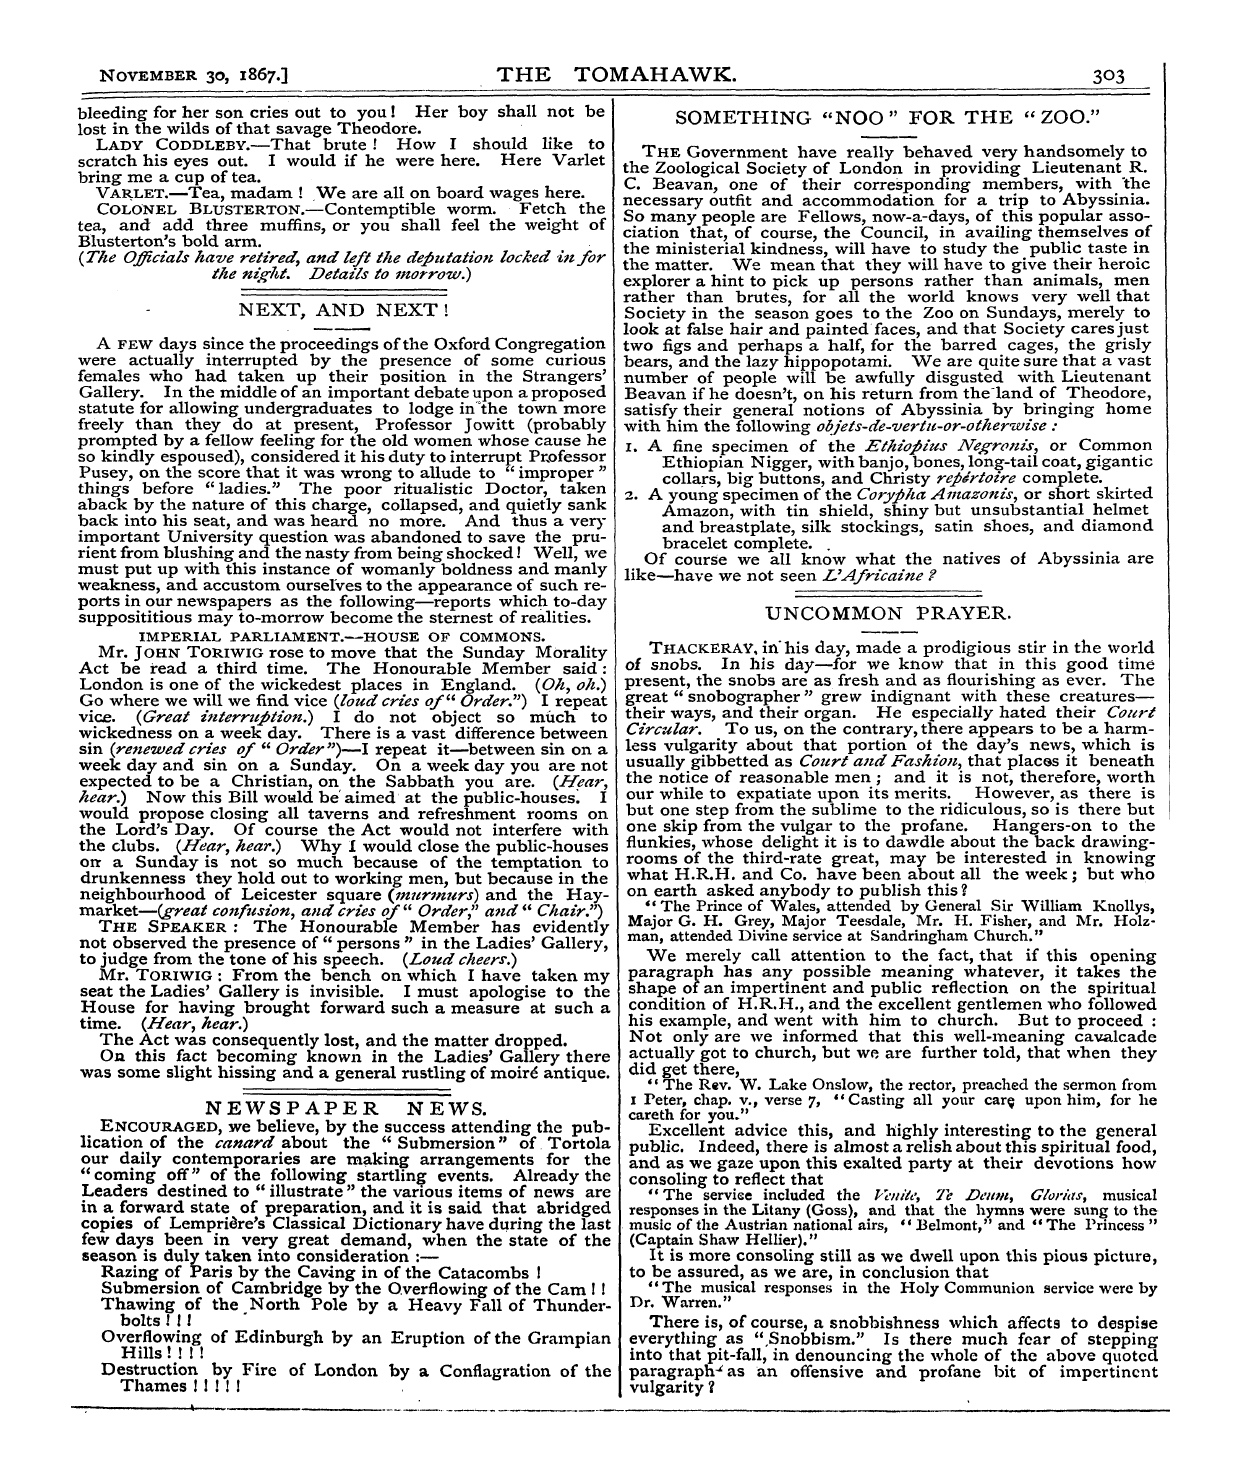 Tomahawk (1867-1870): jS F Y, 1st edition - November 30, 1867.] The Tomahawk. 303